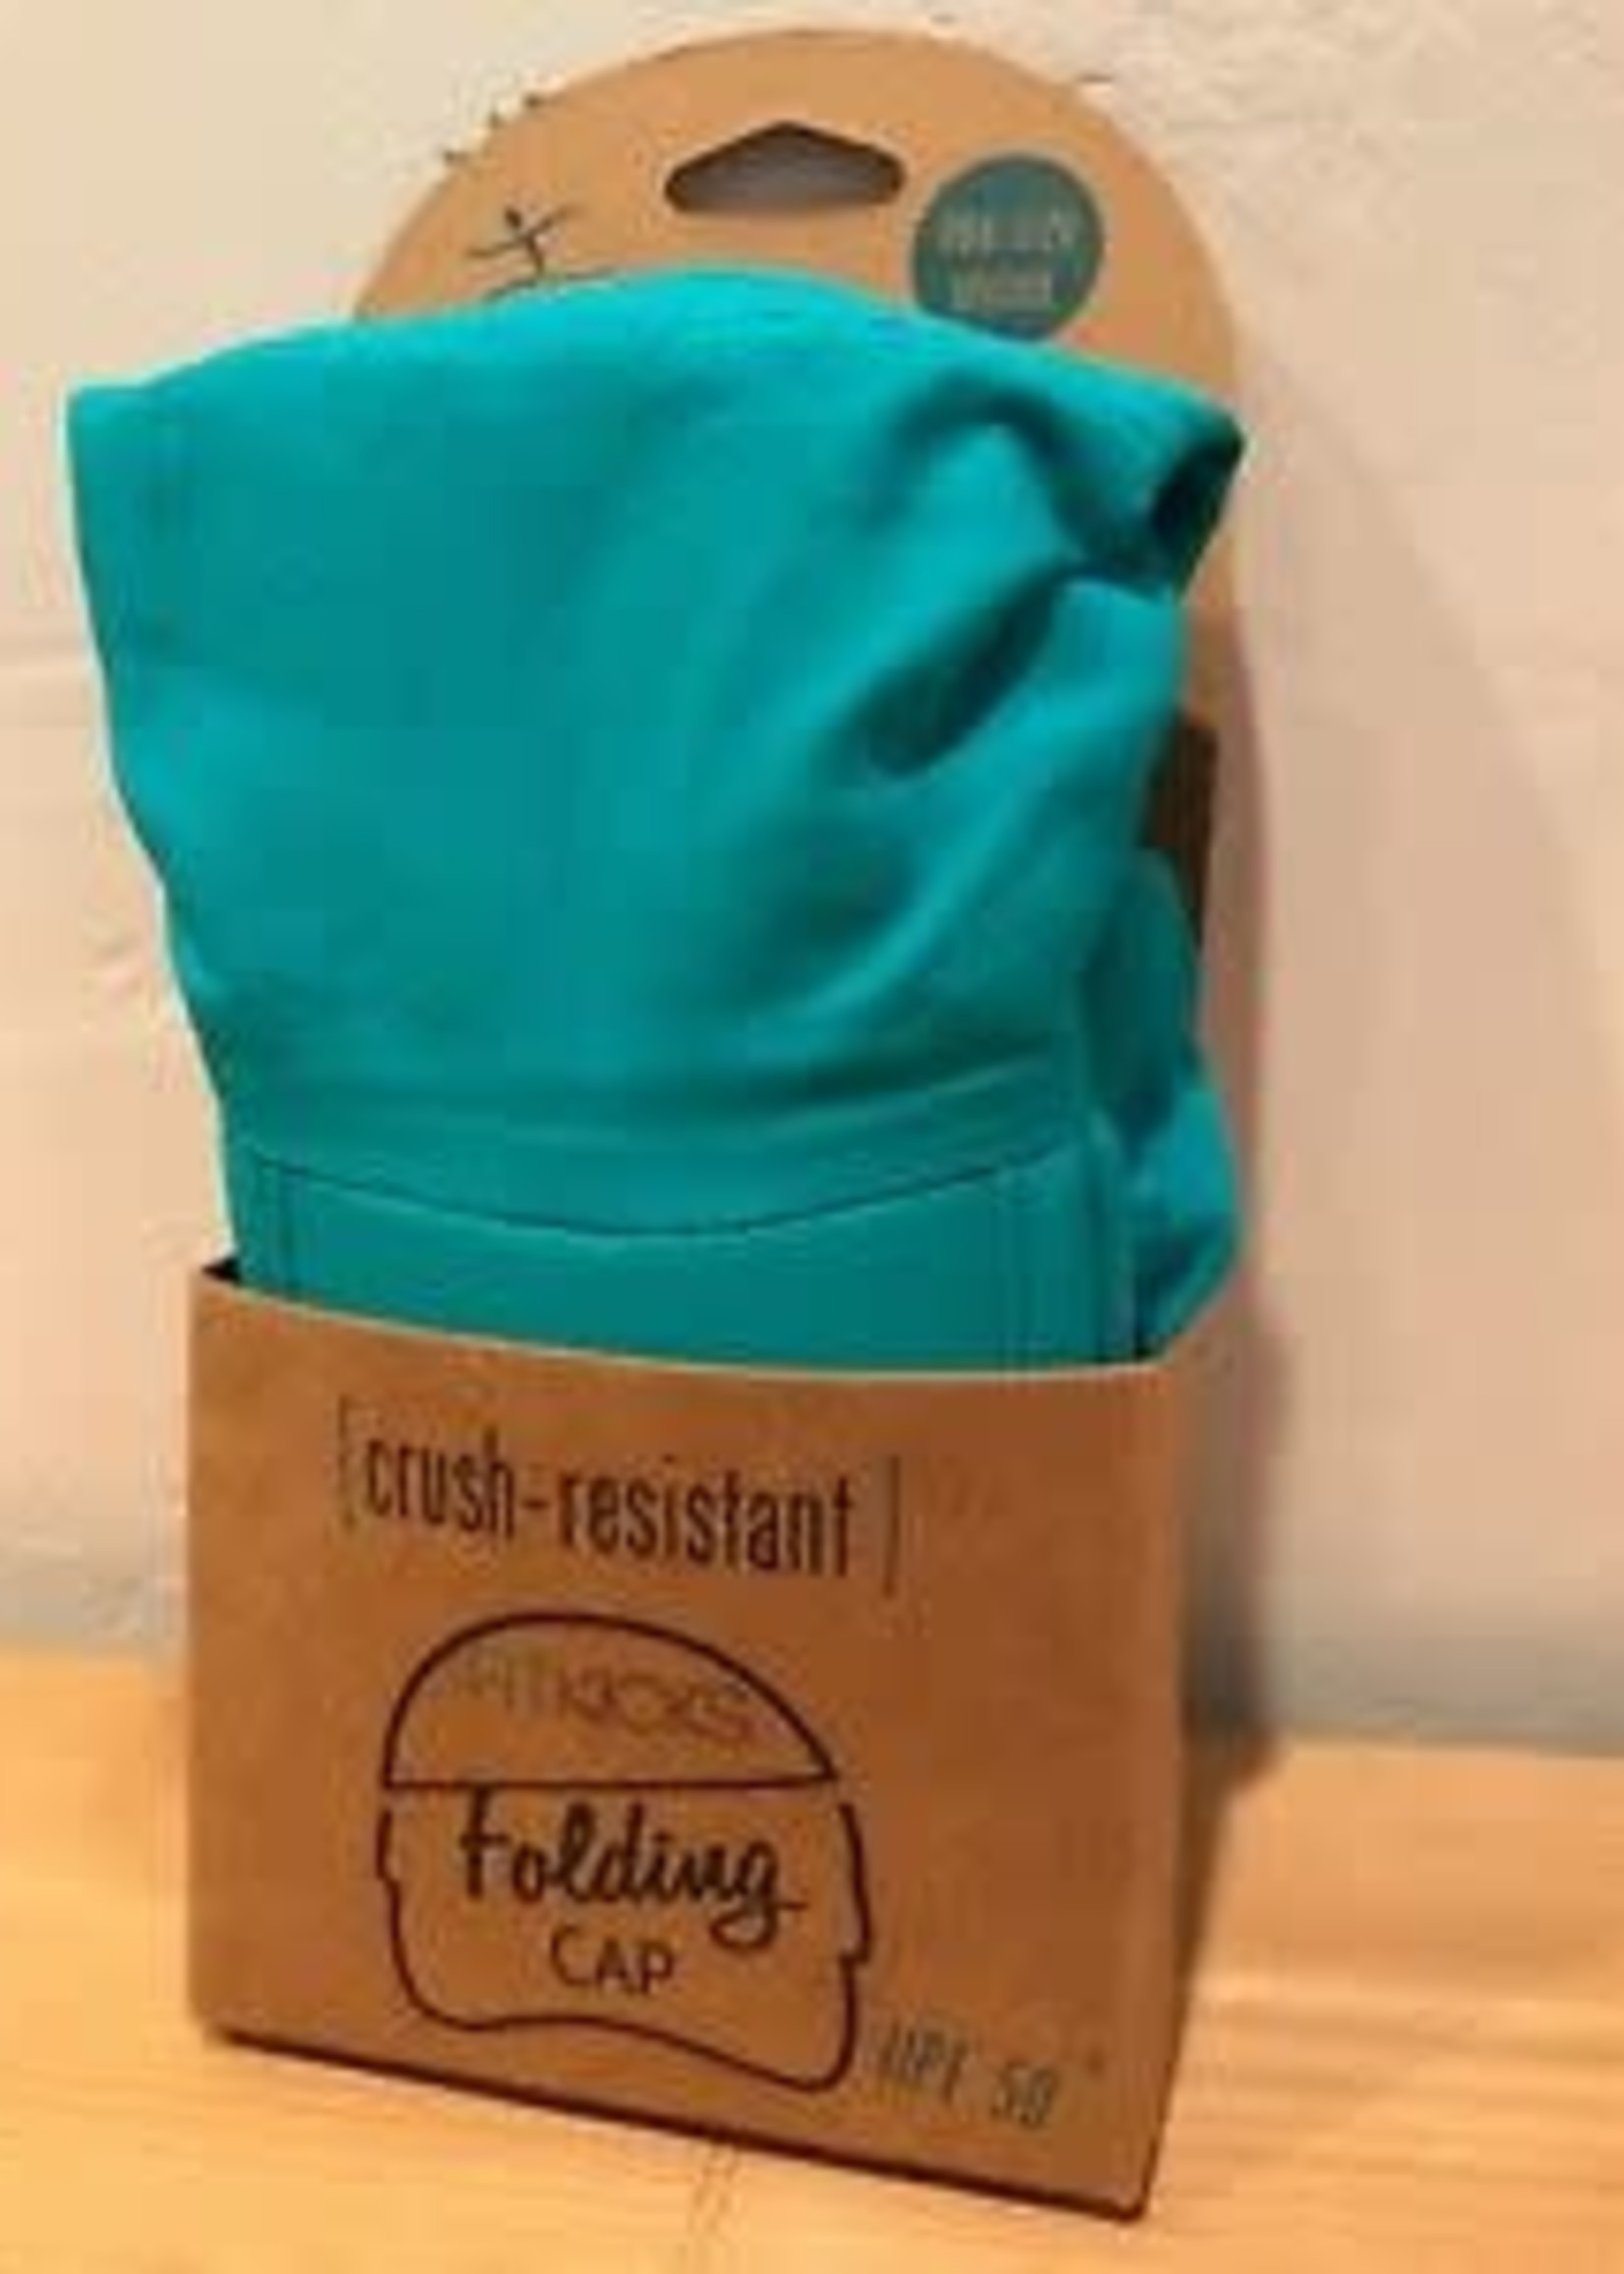 Fitkicks Folding Cap